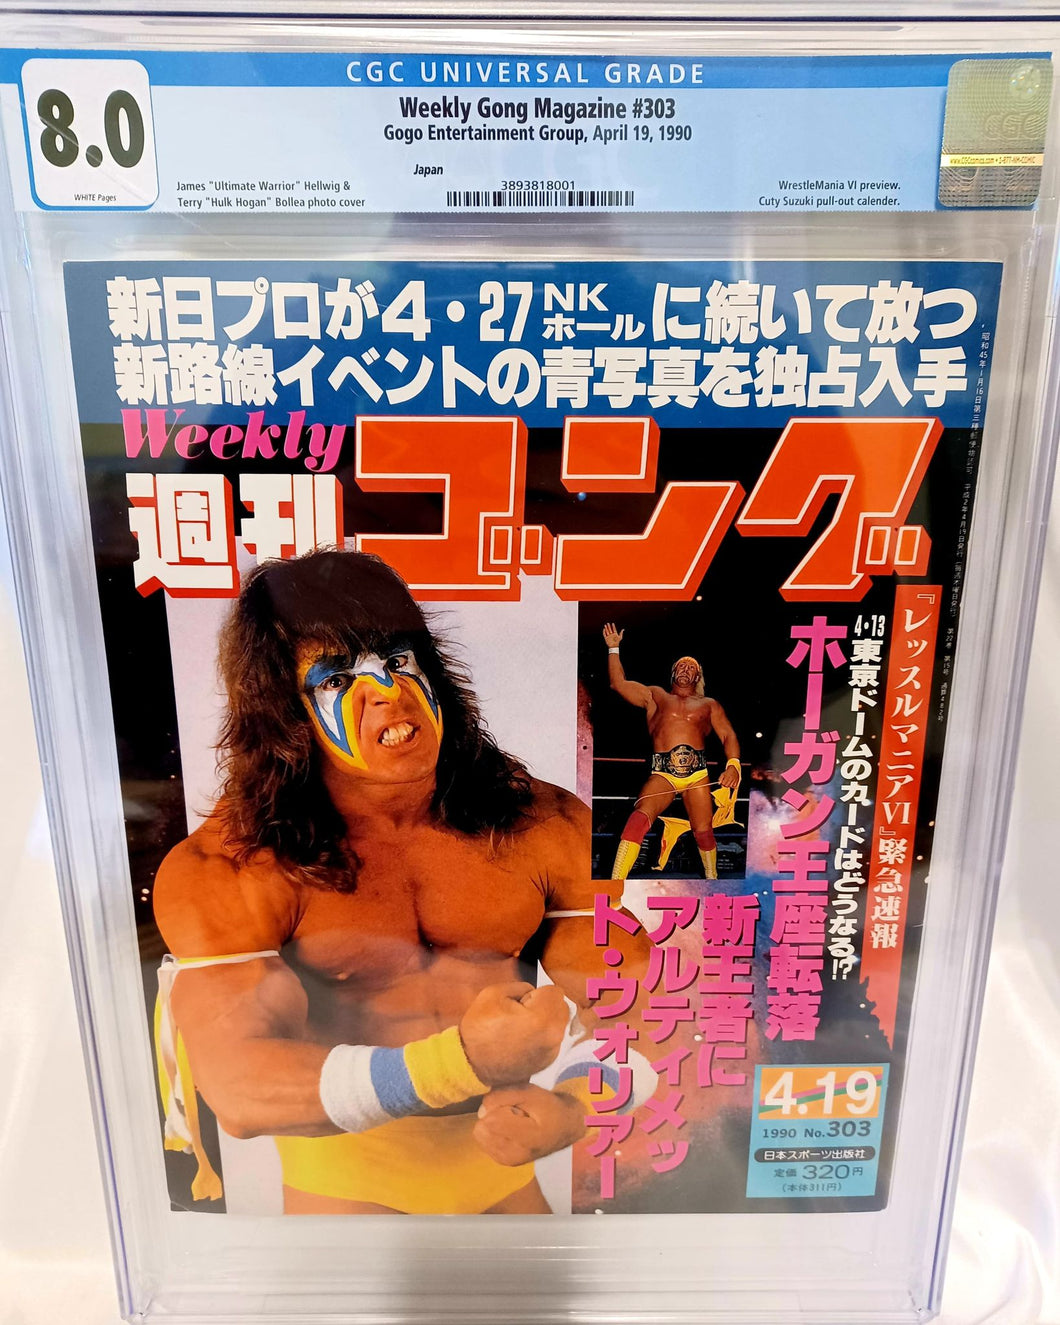 Weekly Gong Magazine #303 CGC 8.0 Hulk Hogan vs Ultimate Warrior WrestleMania VI preview